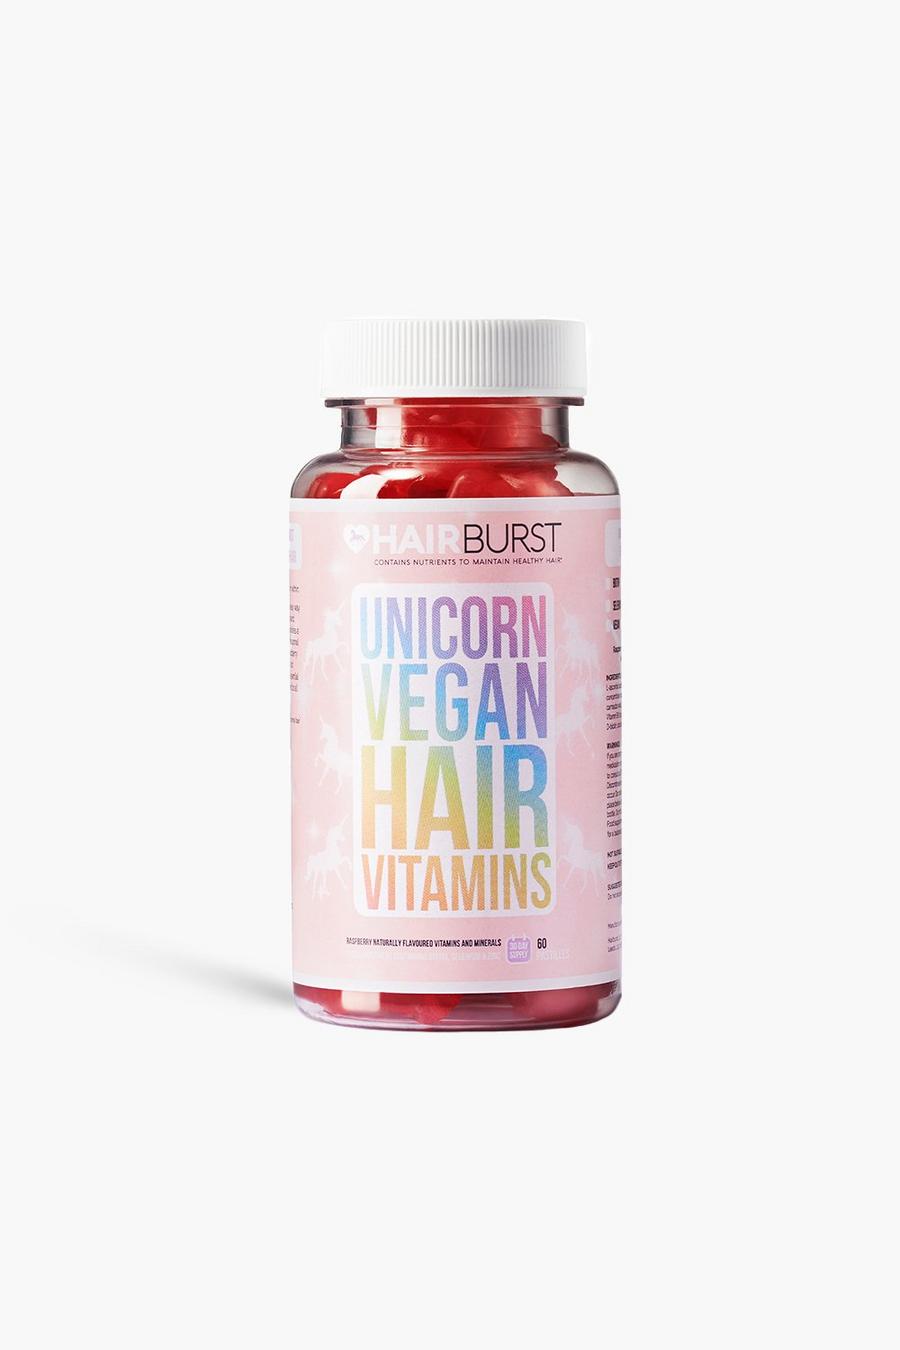 Red Hairburst Unicorn Vegan Hair Vitamins